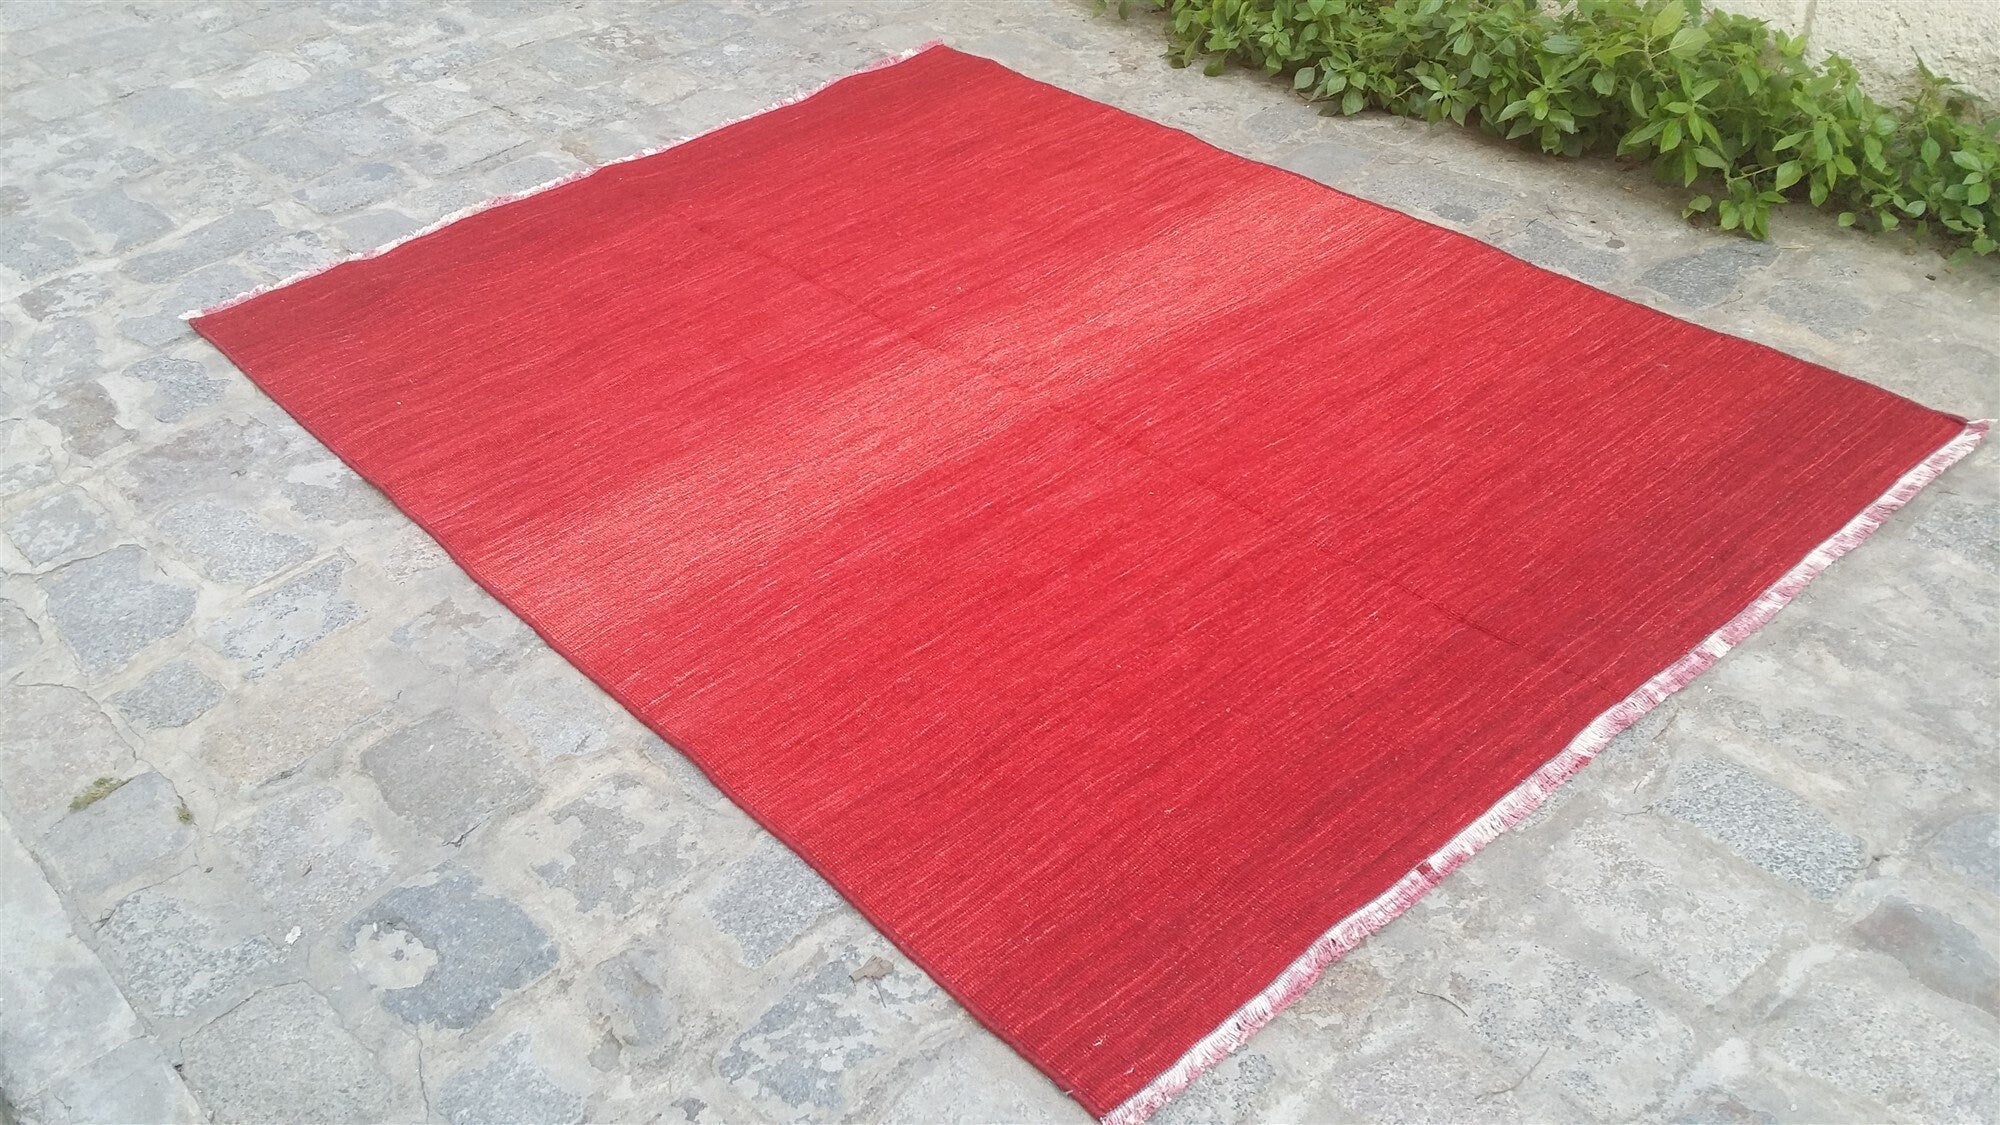 Turkish Kilim Rug 6 x 4 ft Terracotta Red Vintage Handmade Wool Kilim, Antique Persian Boho Rustic Farmhouse Floor Rug